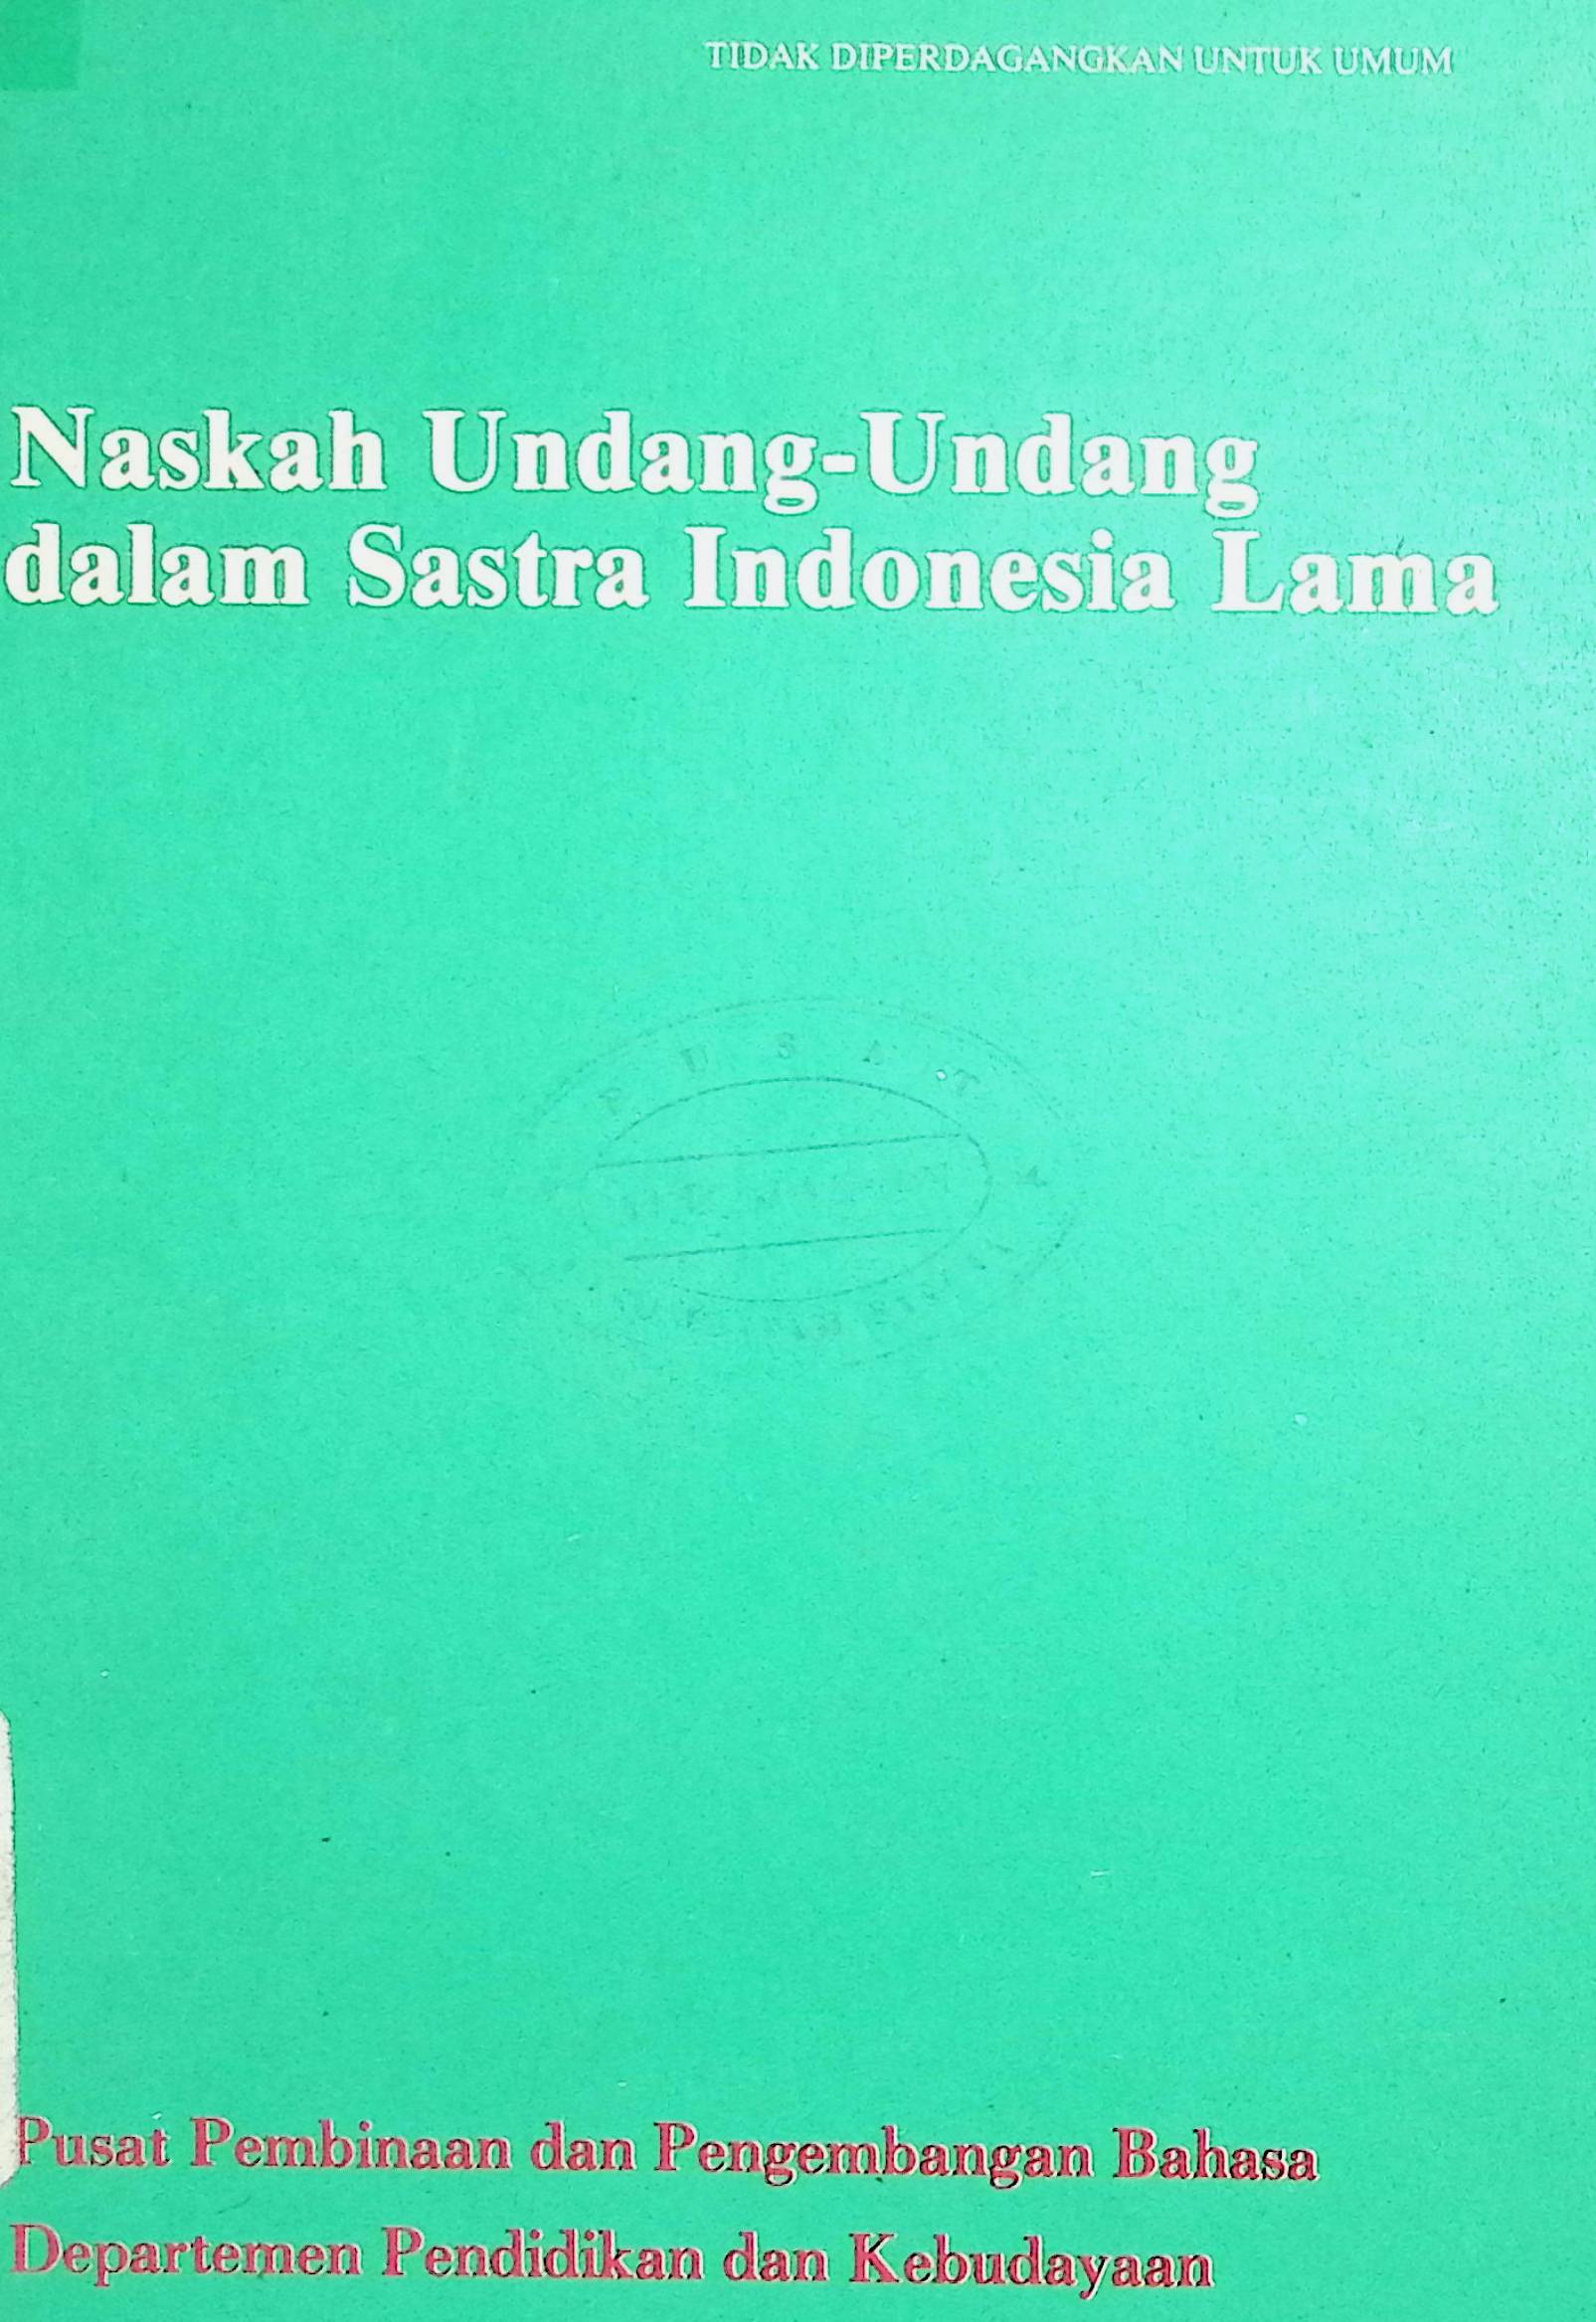 Naskah Undang-undang dalam sastra Indonesia lama